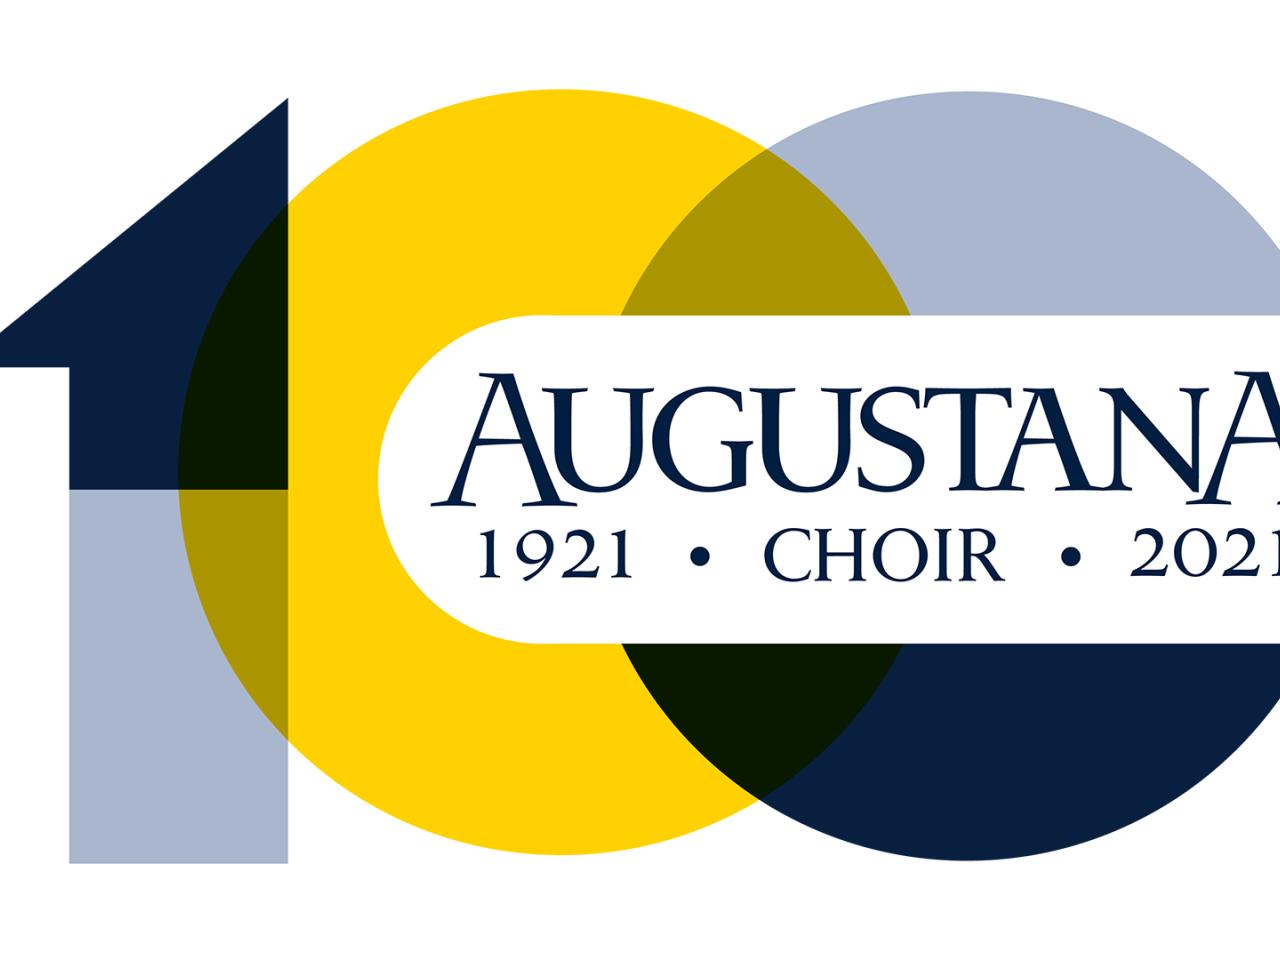 augustana choir tour 2023